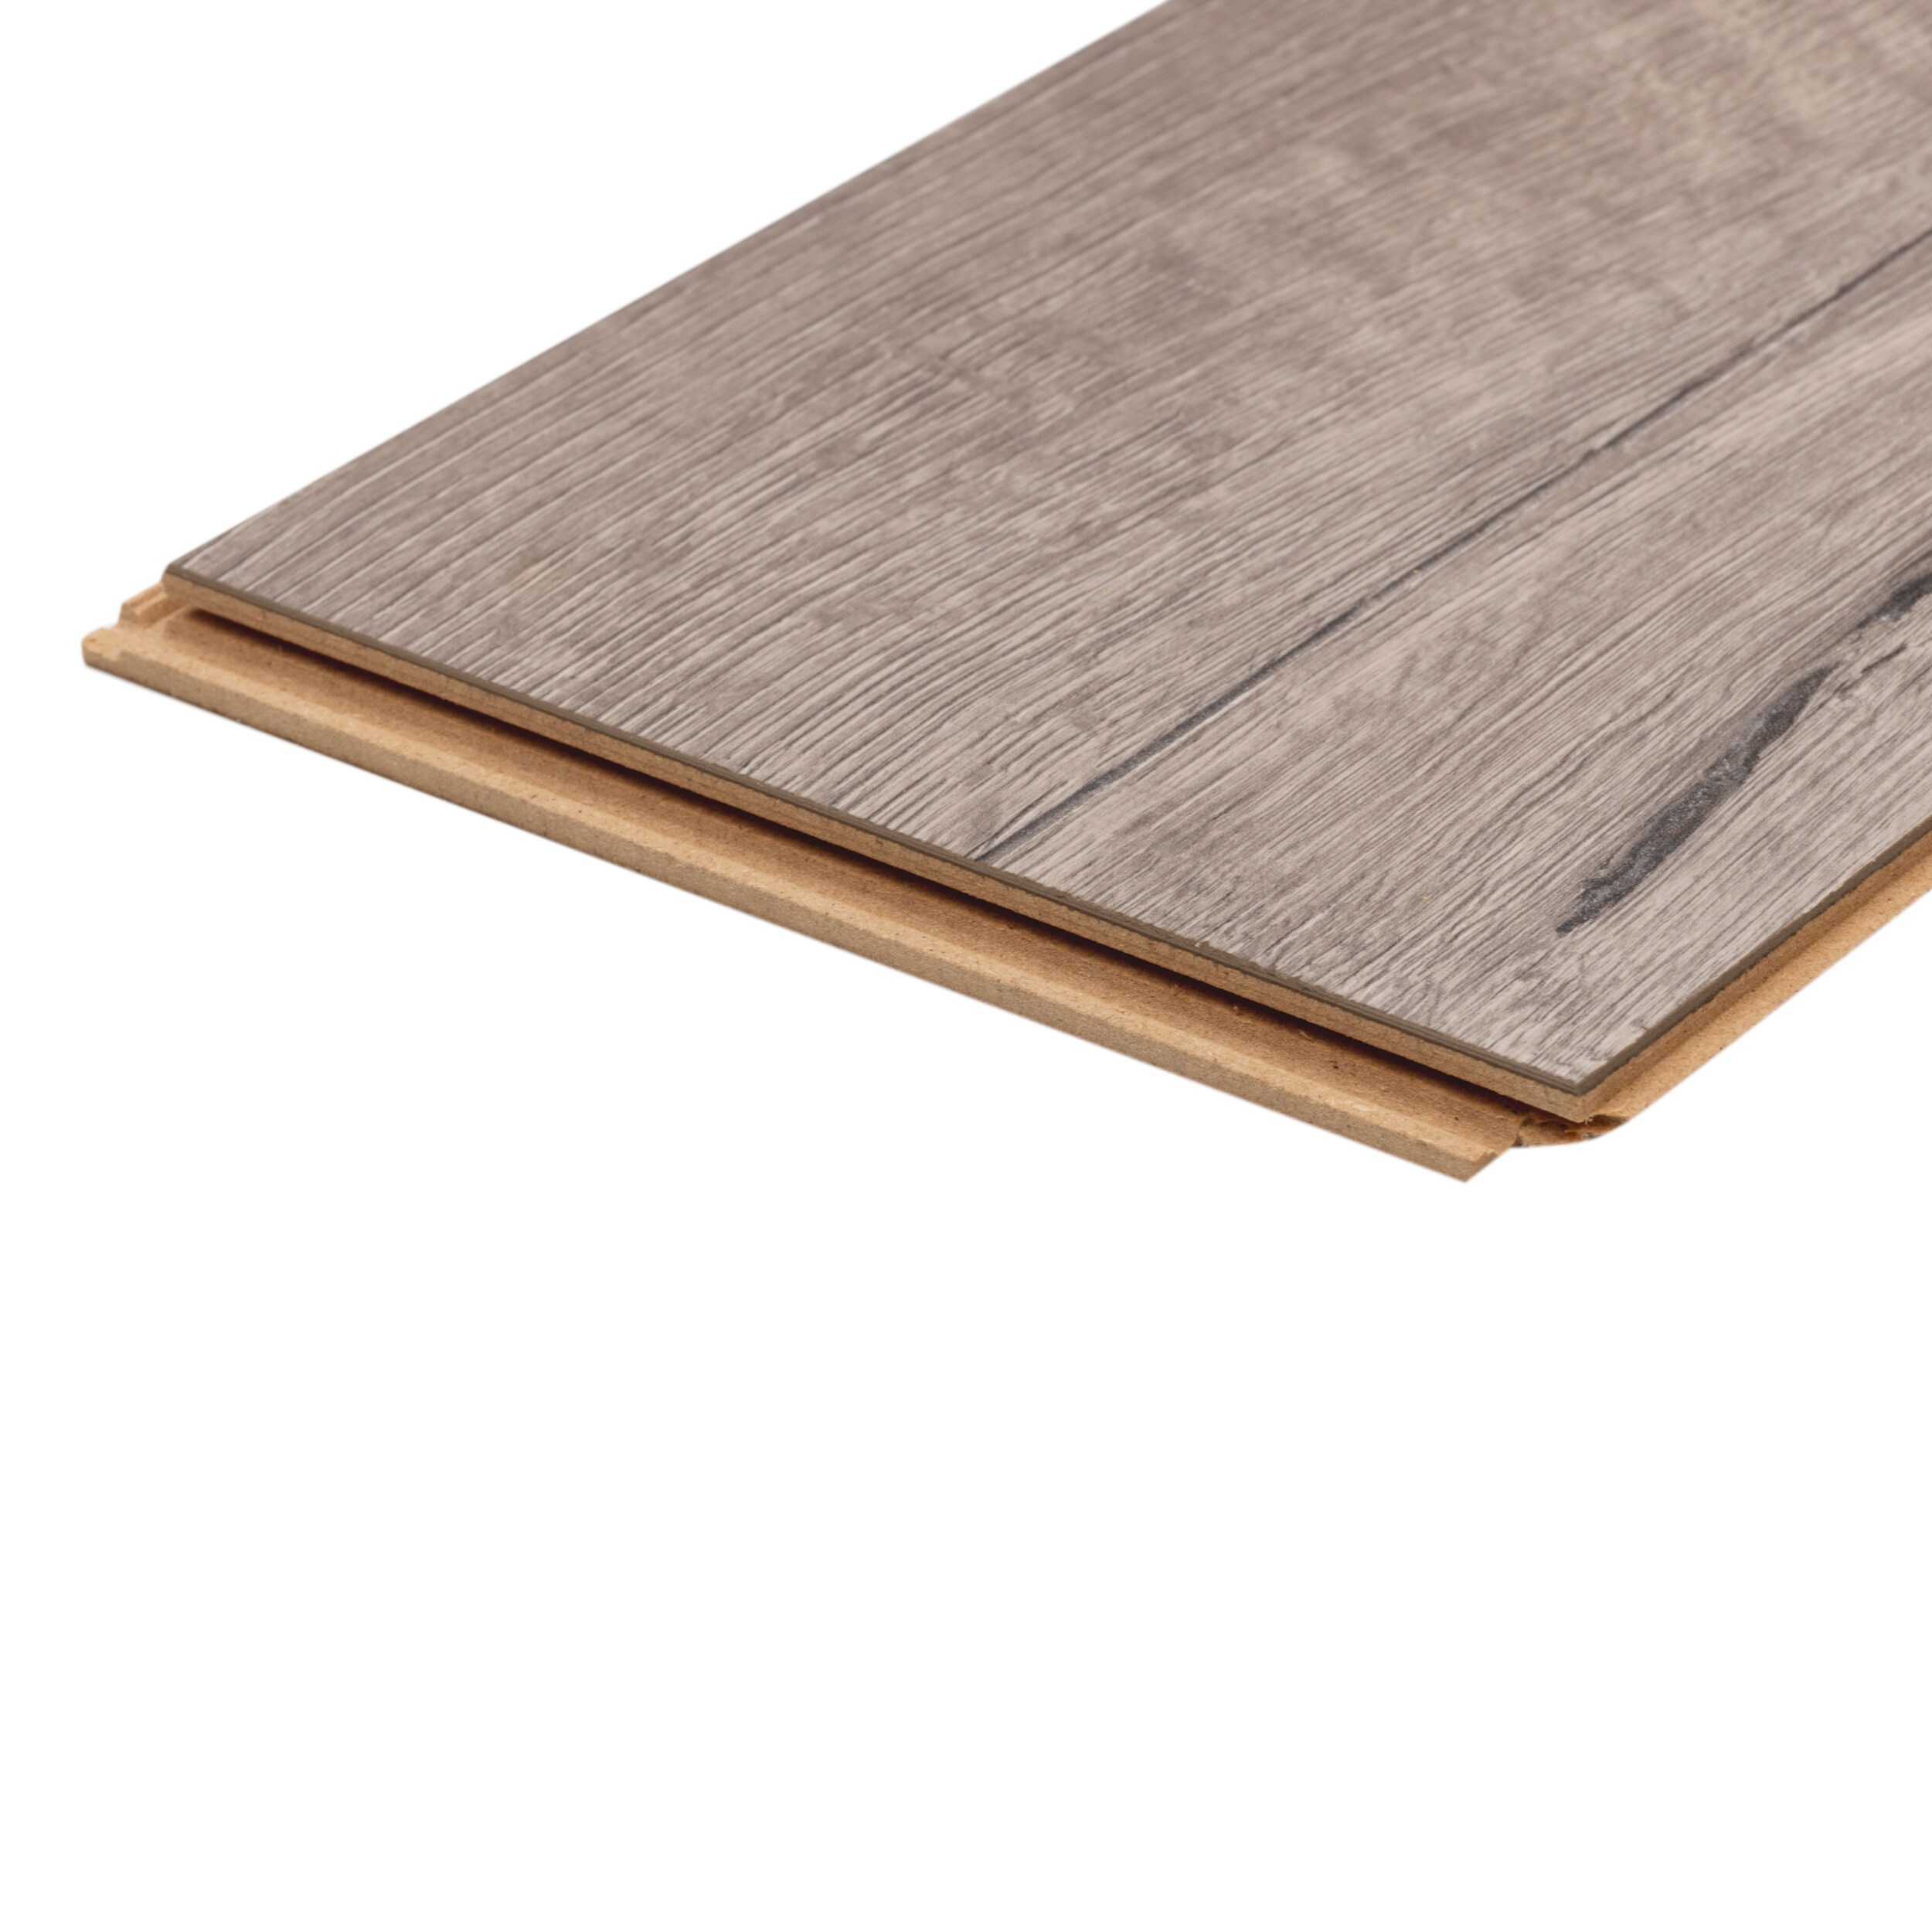 Pergo Portfolio + WetProtect Dove White Oak 10-mm T x 6-in W x 47-1/4-in L  Waterproof Wood Plank Laminate Flooring (20.15-sq ft) in the Laminate  Flooring department at